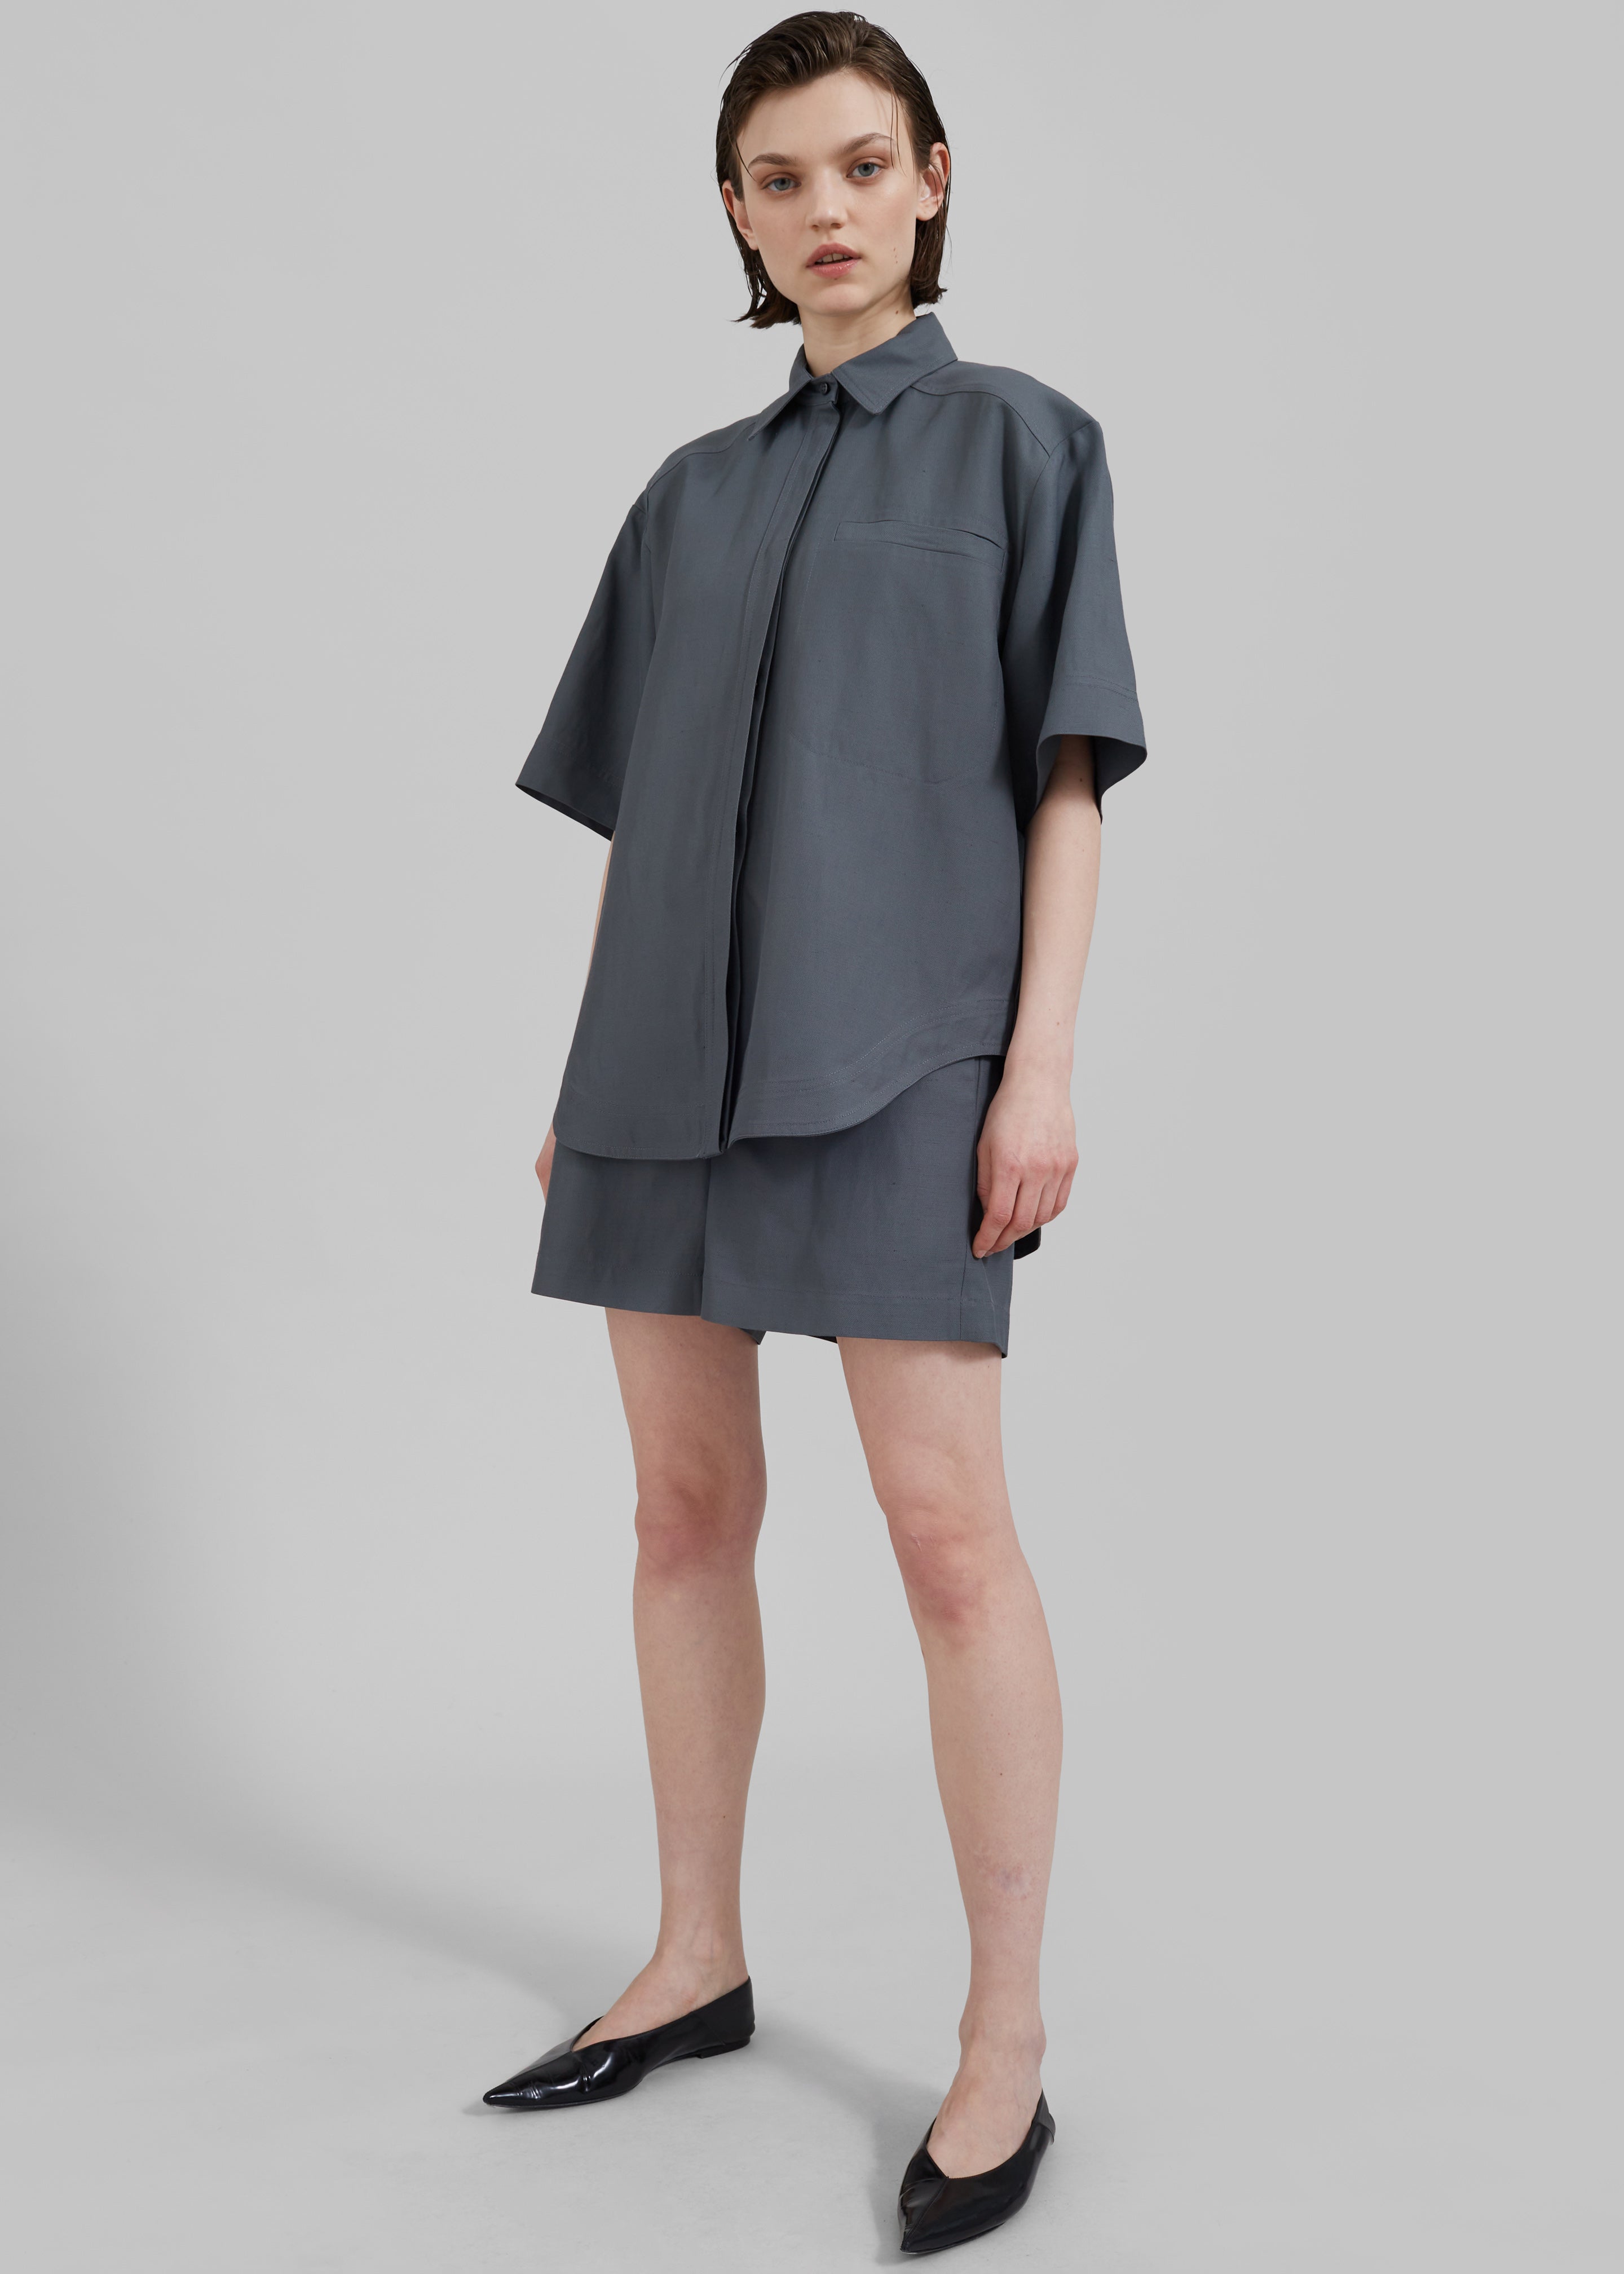 Loulou Studio Moheli Short Sleeve Shirt - Fjord Grey - 2